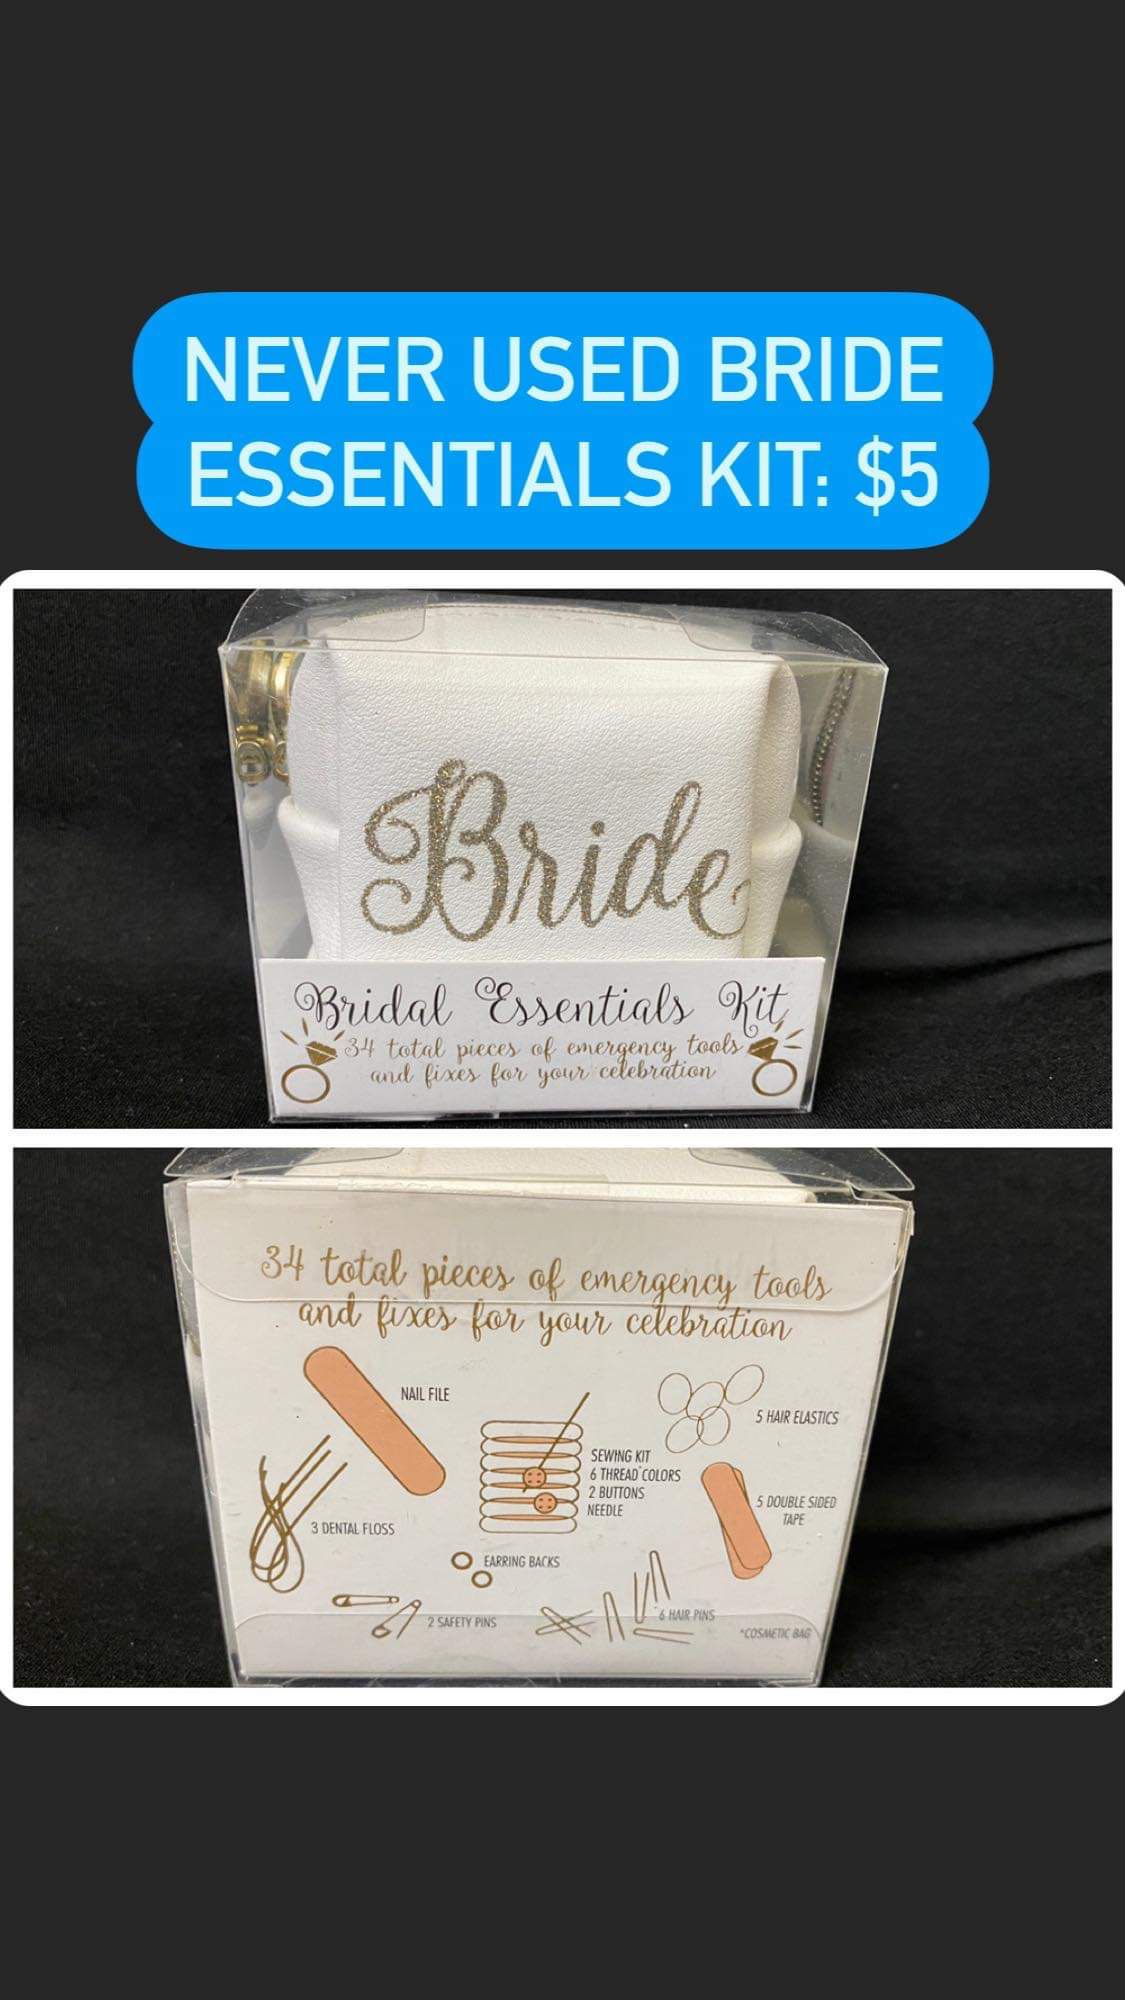 Bride Kit - Essential Items (Wedding)